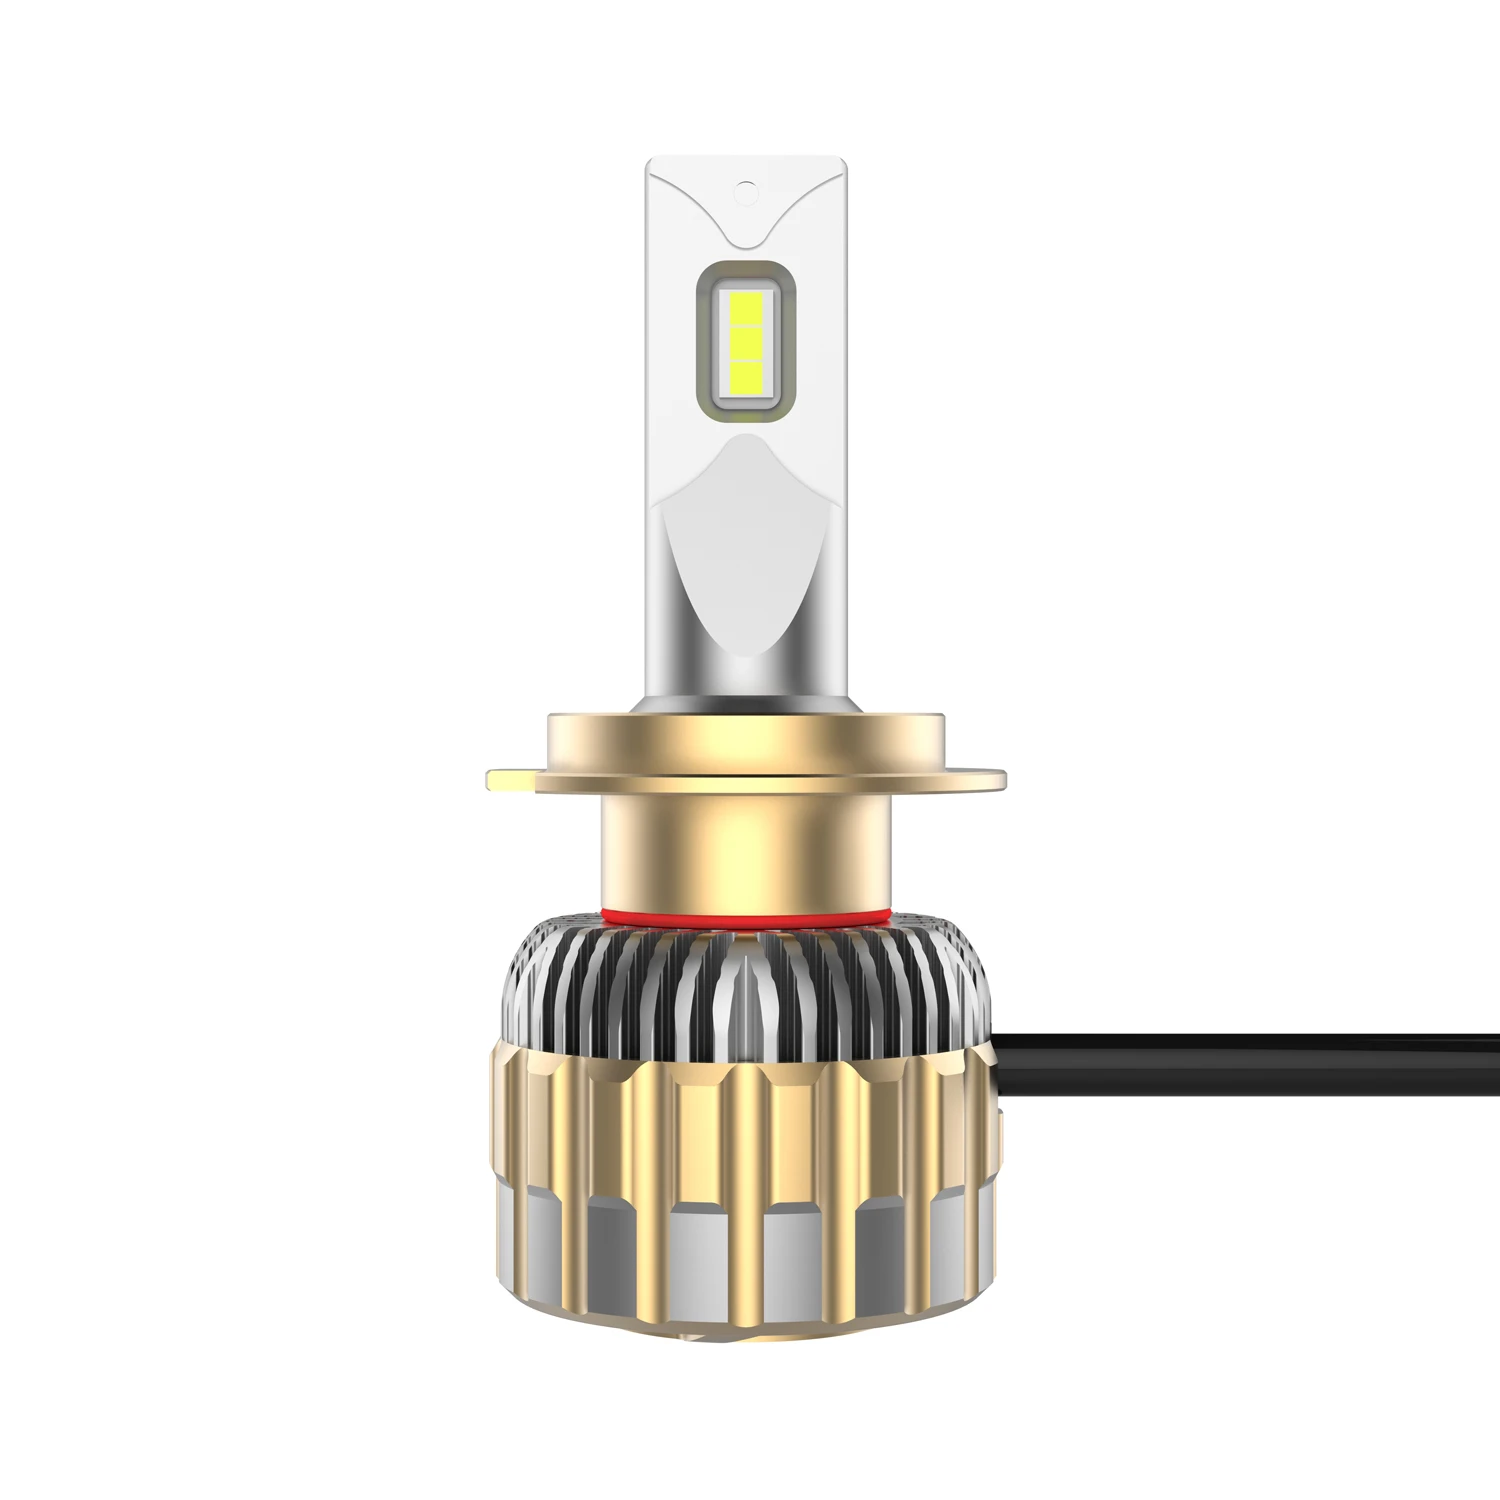 Arastar 2020 New Auto Motor Lighting System H4 Hi/Low Fanless Car LED Headlight Bulb Fog lamp